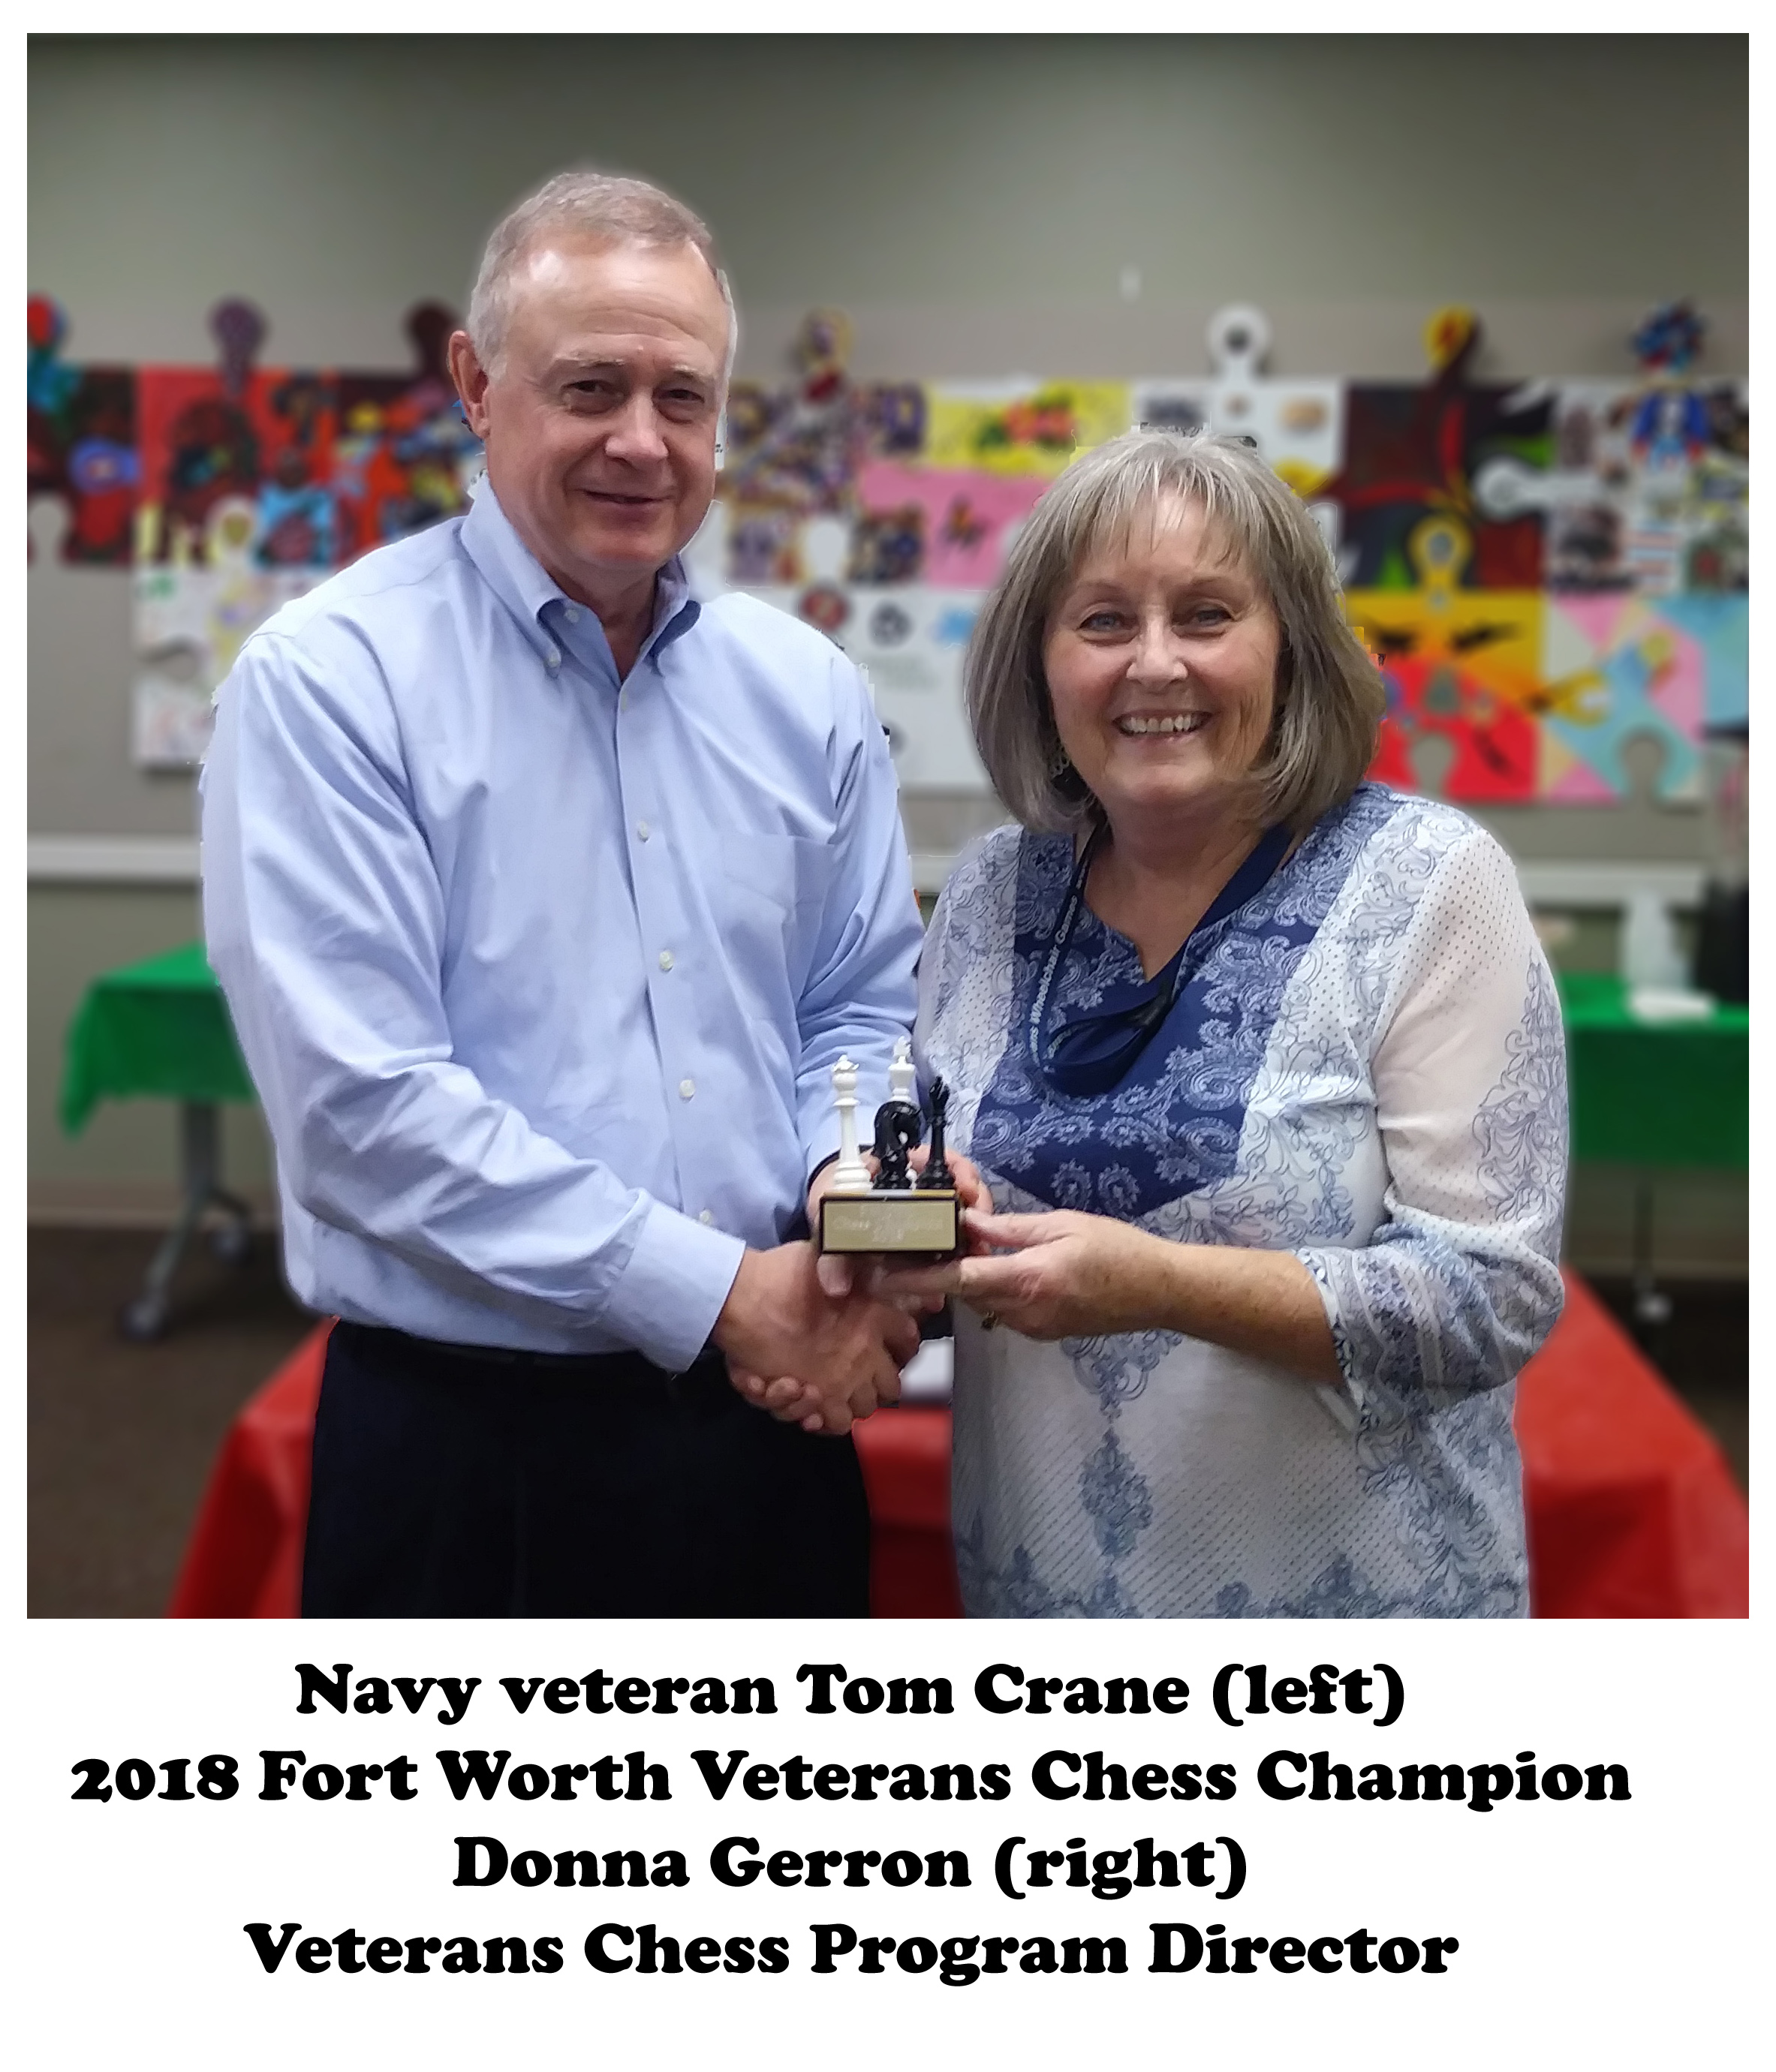 Navy veteran Tom Crane is the new 2018 Fort Worth Veterans Champion